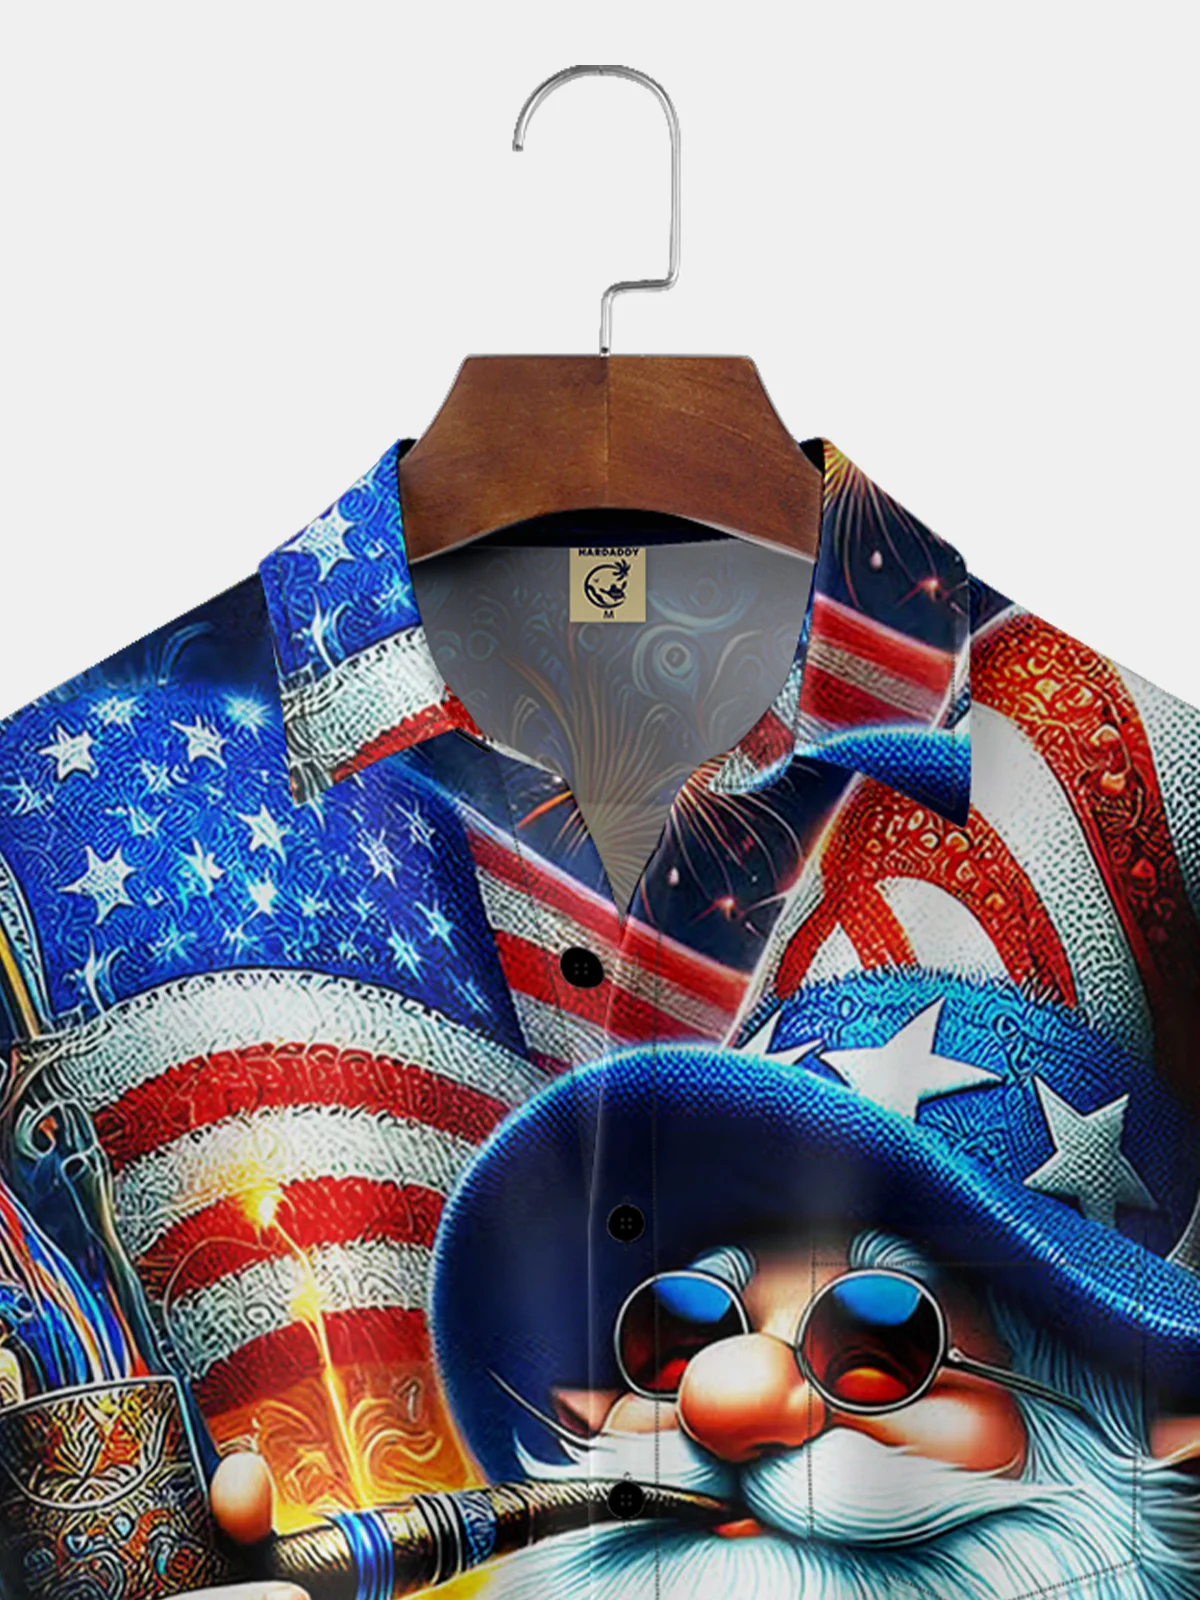 Moisture-wicking American Flag Gnome Chest Pocket Hawaiian Shirt